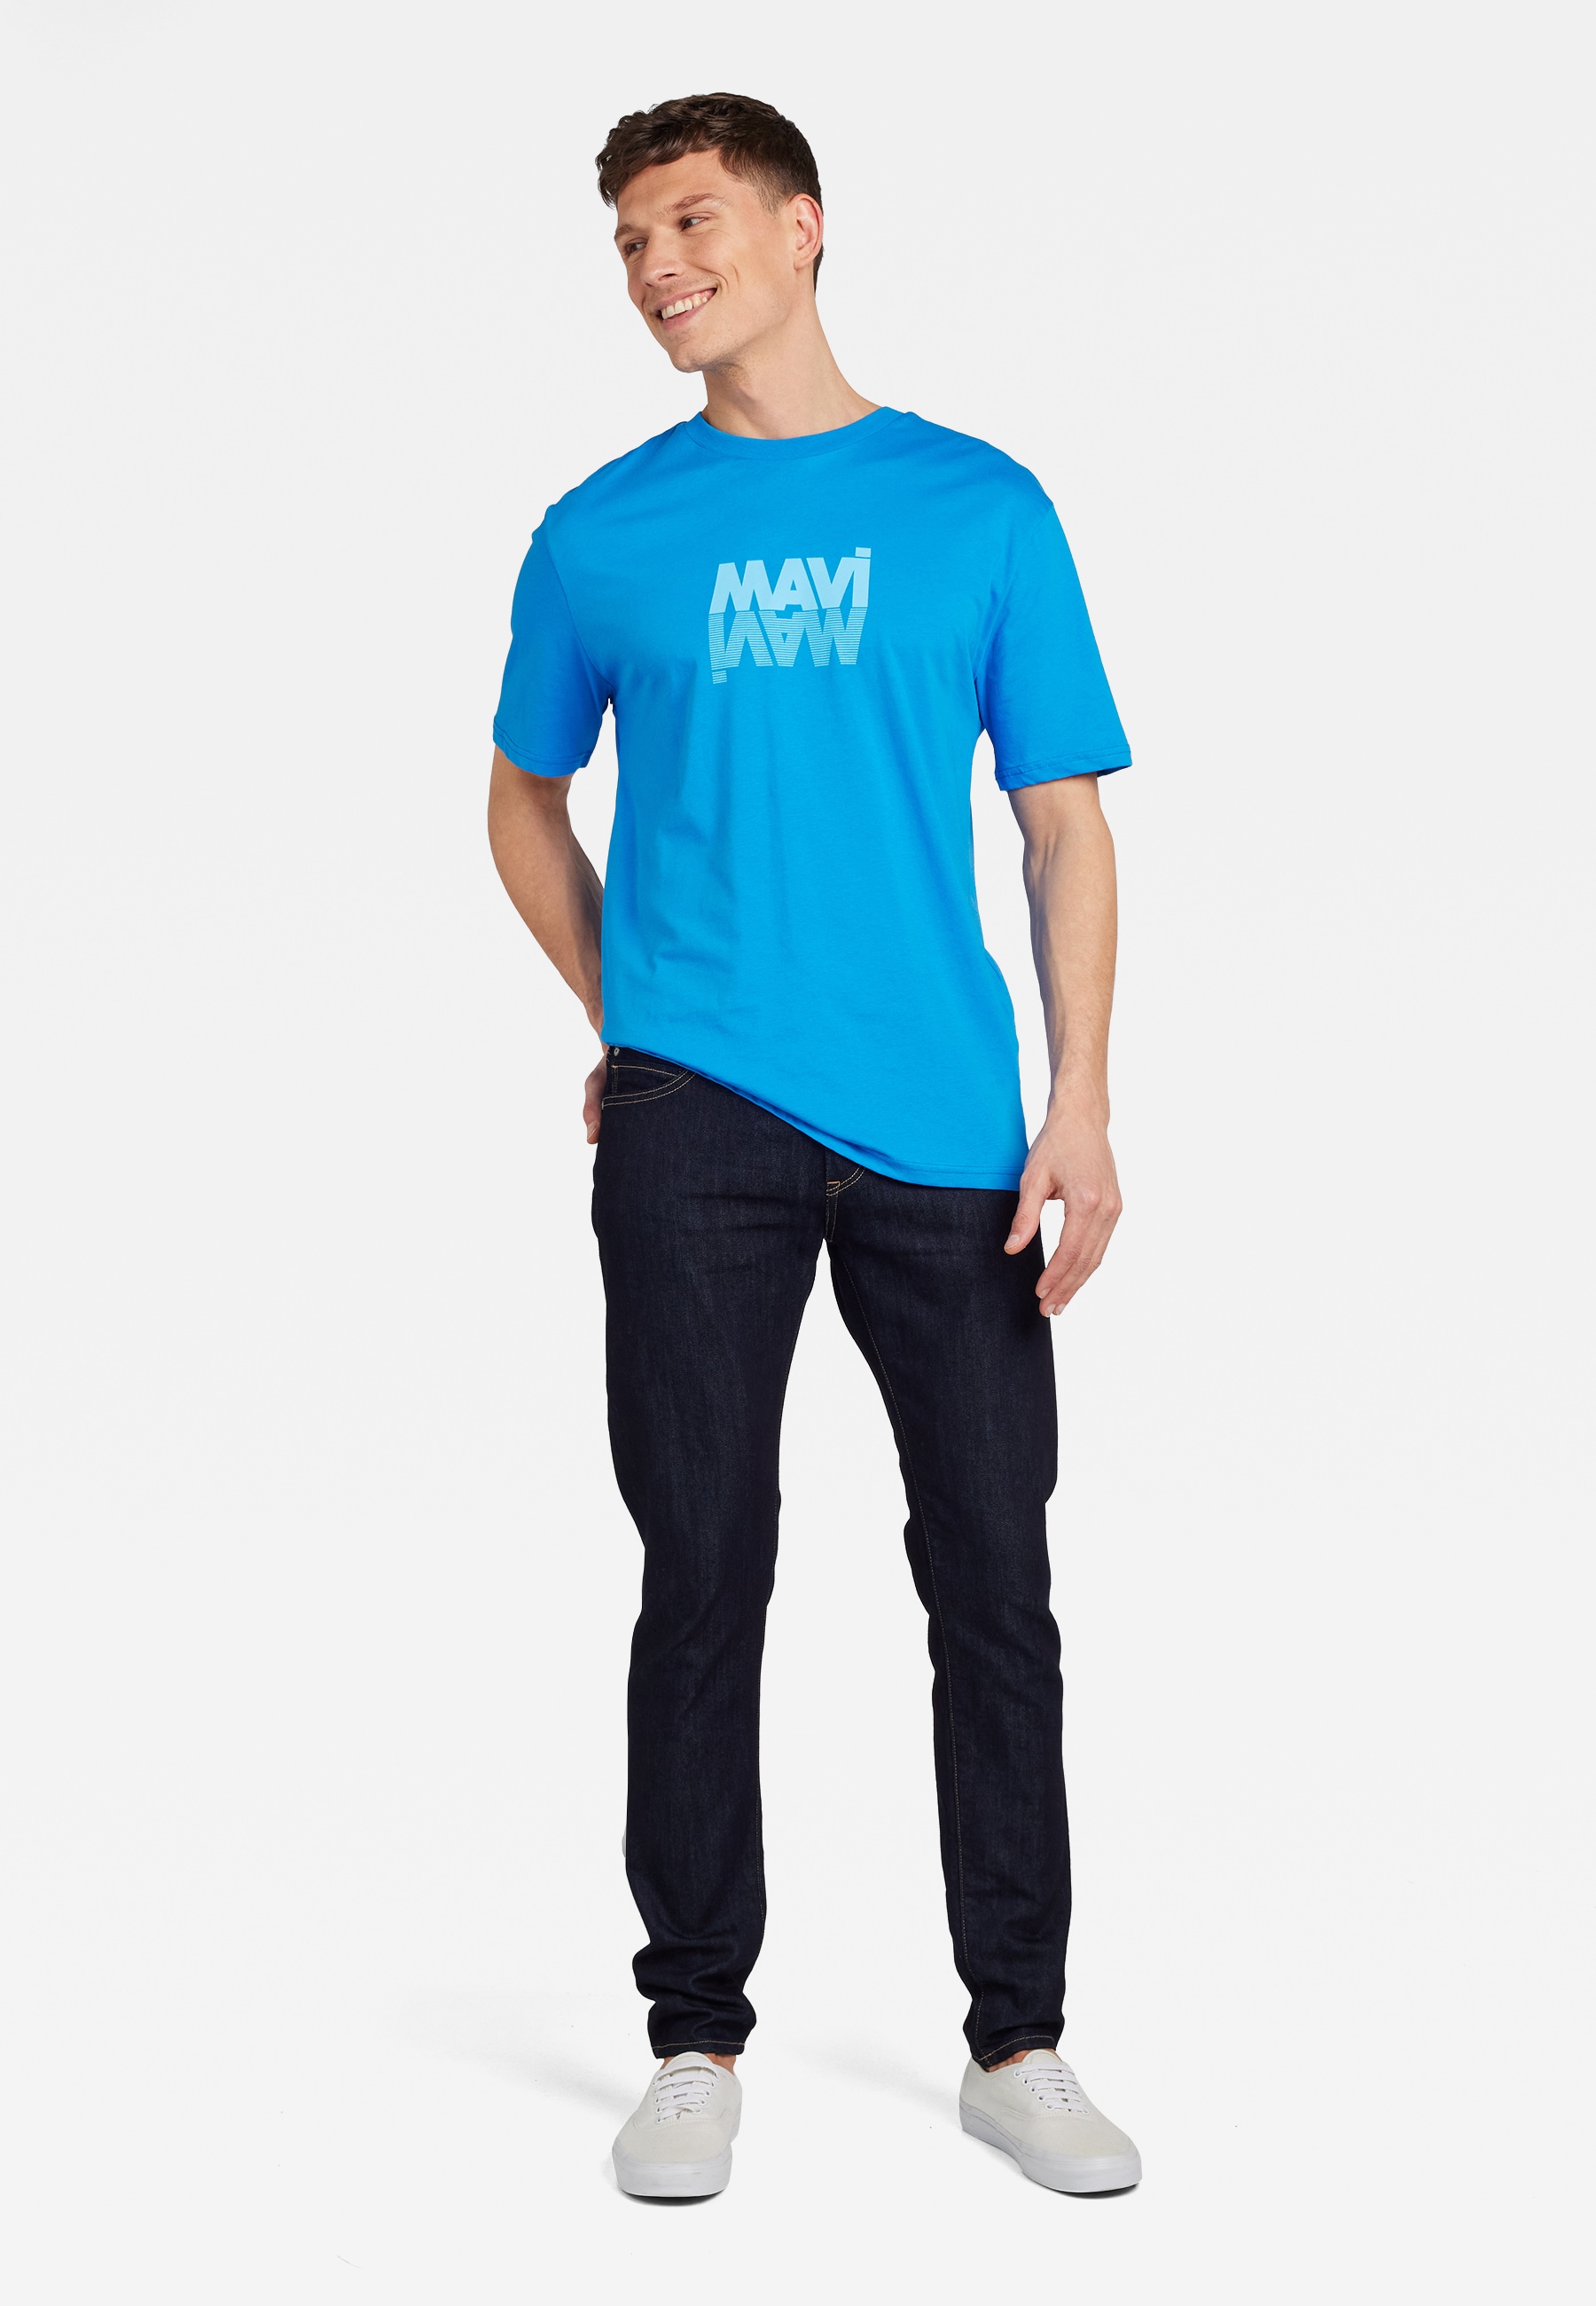 Rundhalsshirt »MAVI LOGO TEE«, T-Shirt mit Mavi Print